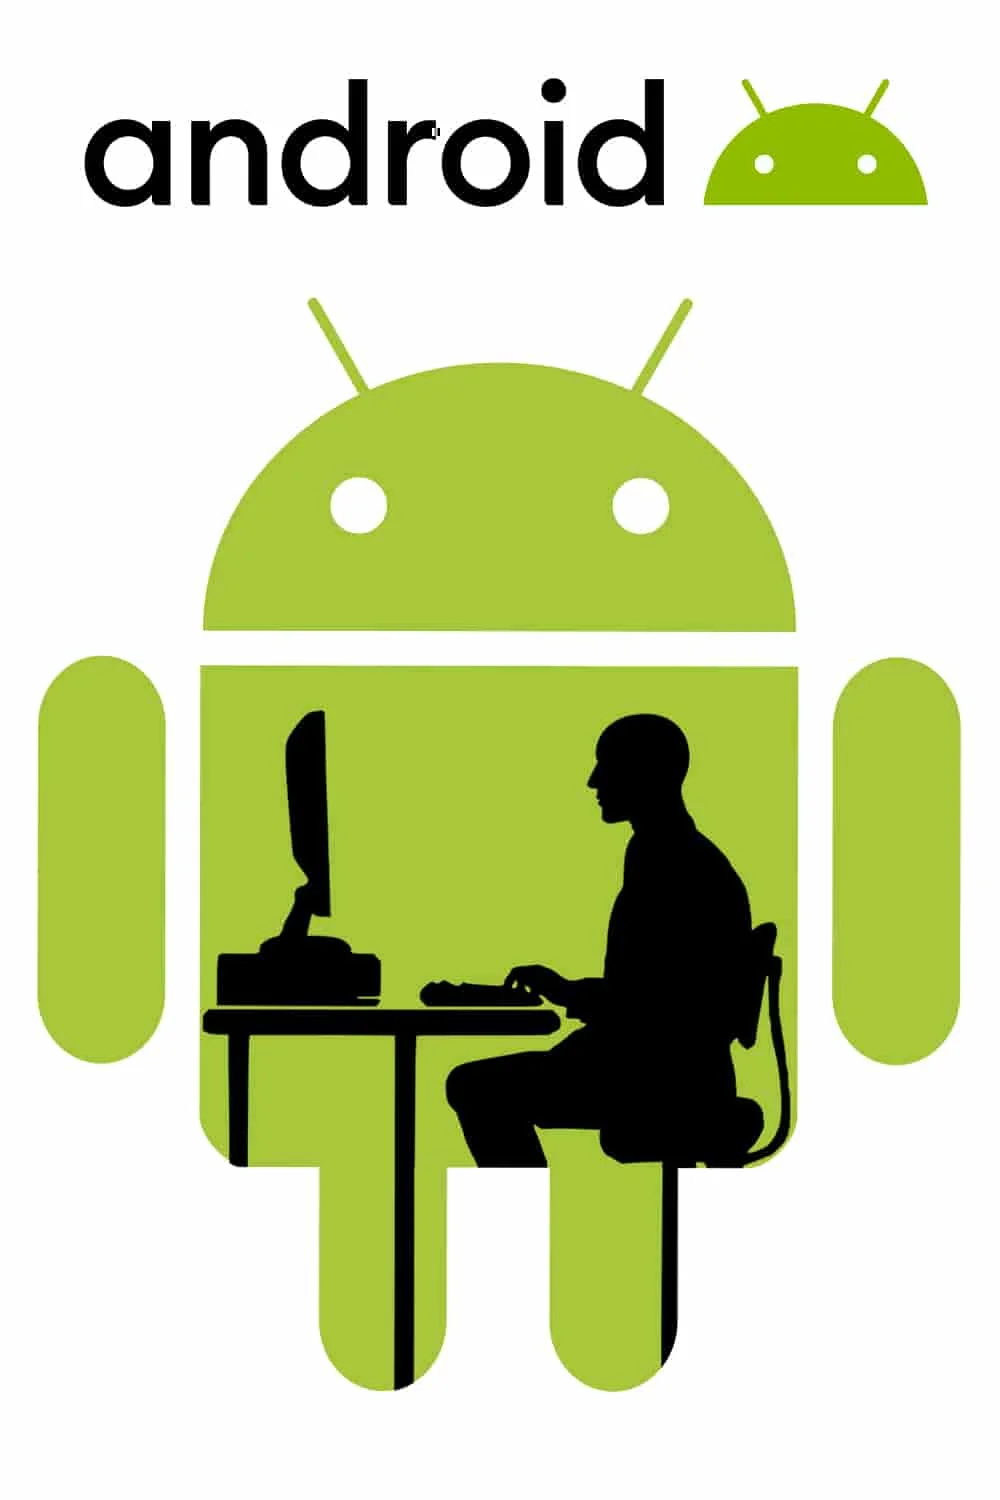 Android Application Development Company in mumbai